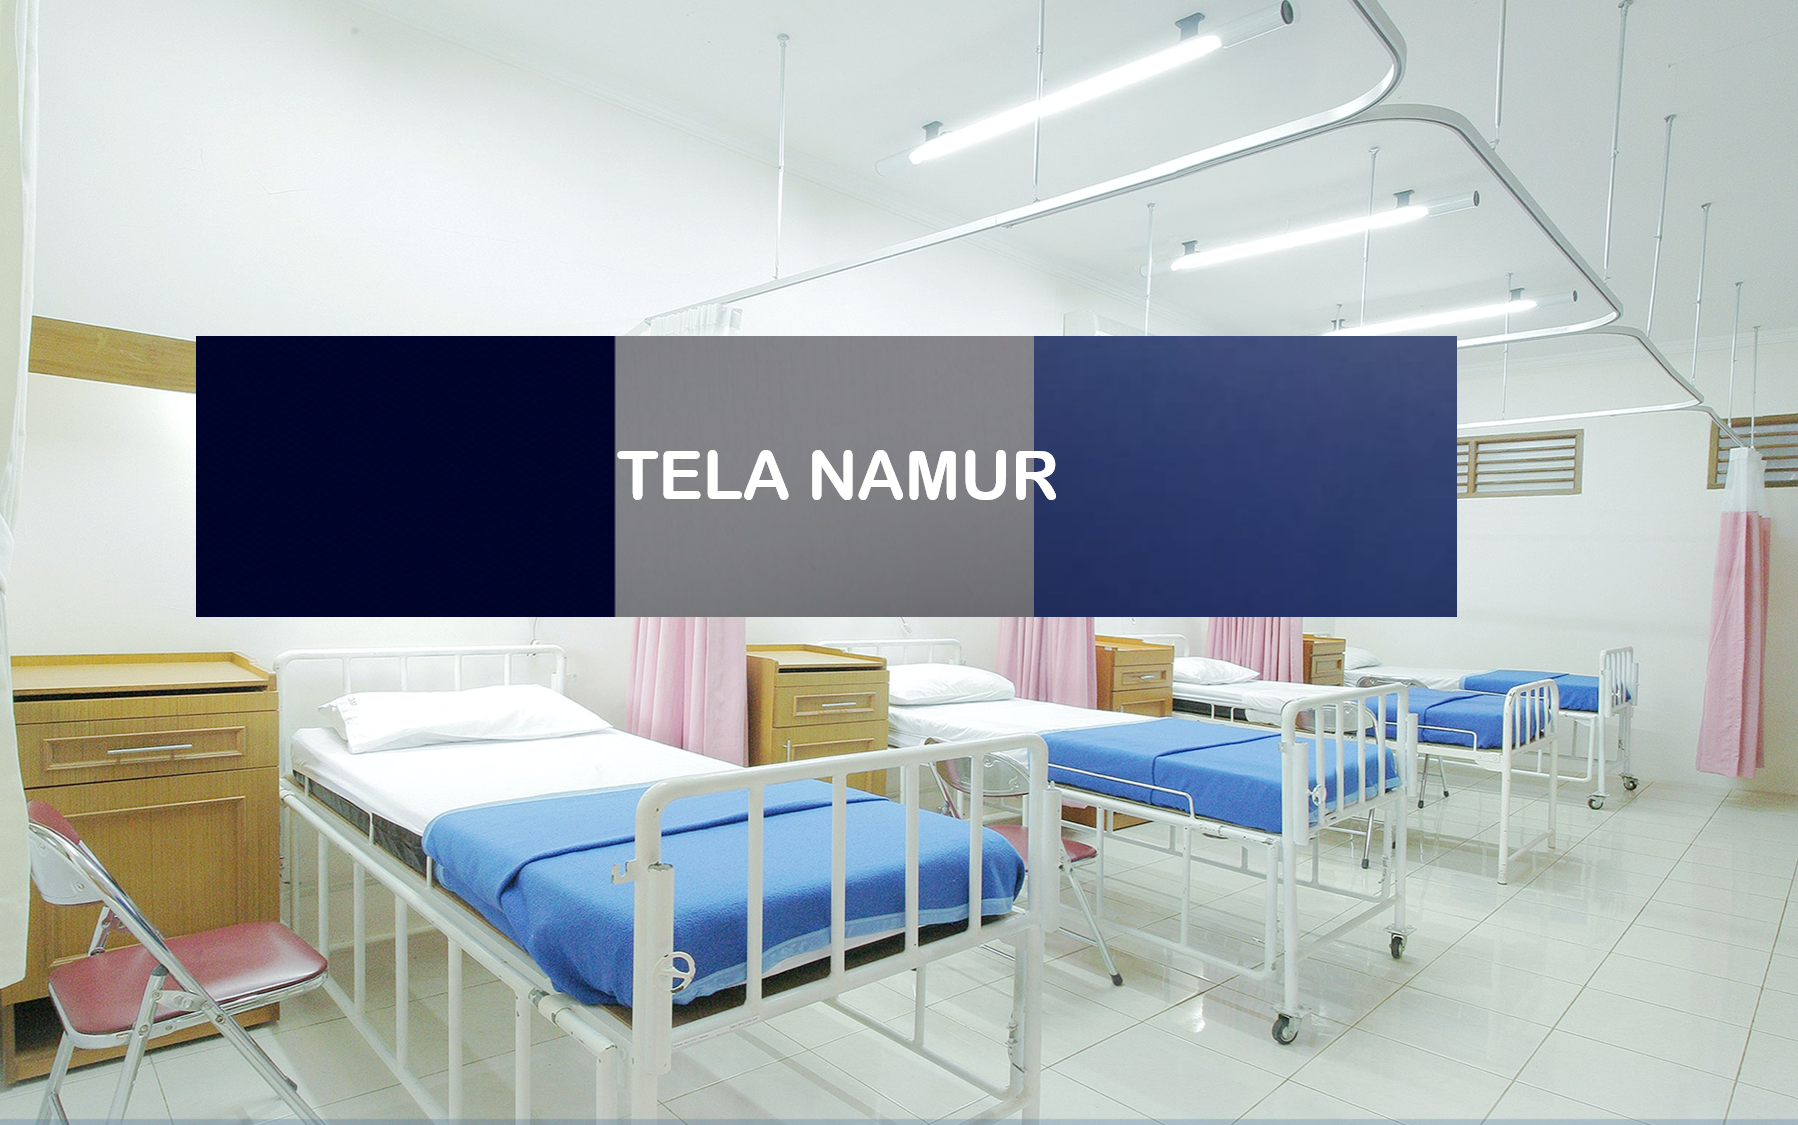 Tela-Namur-para-colchoneta-Hospitalaria-antifluido-impermeable-Azul-Gris-Negro